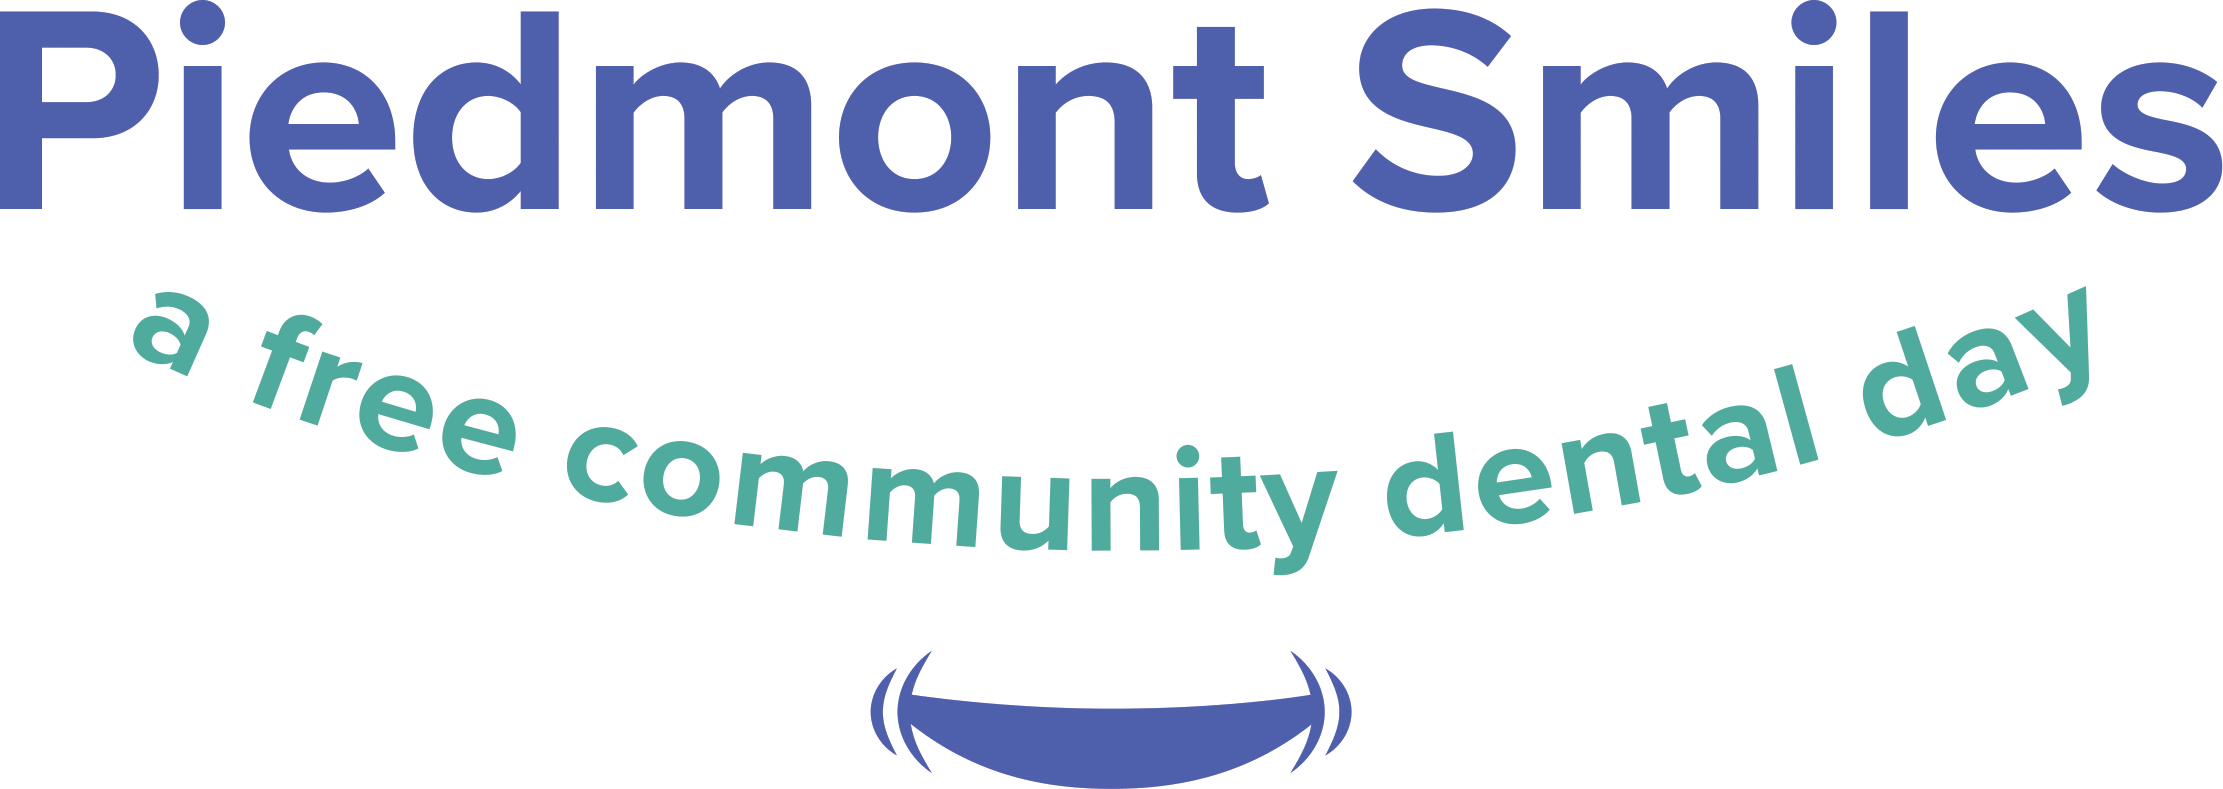 Piedmont Smiles logo